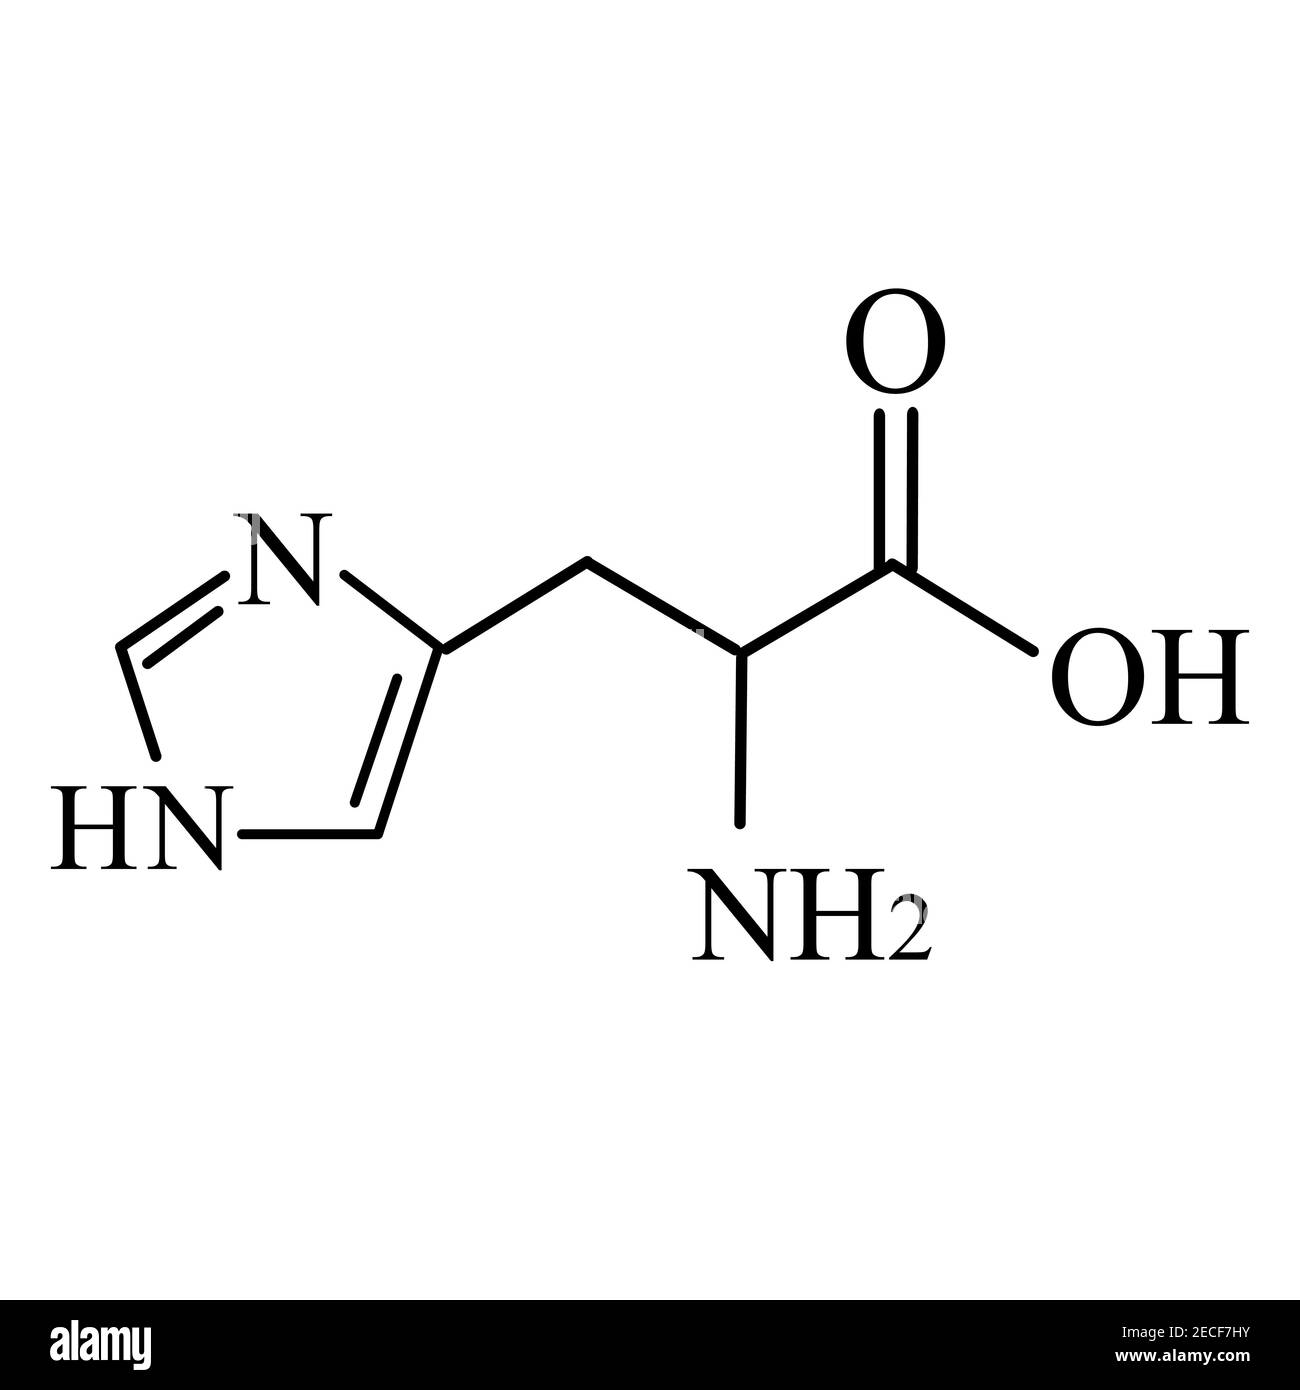 Amino acid Histidine. Chemical molecular formula Histidine amino acid. Vector illustration on isolated background Stock Vector